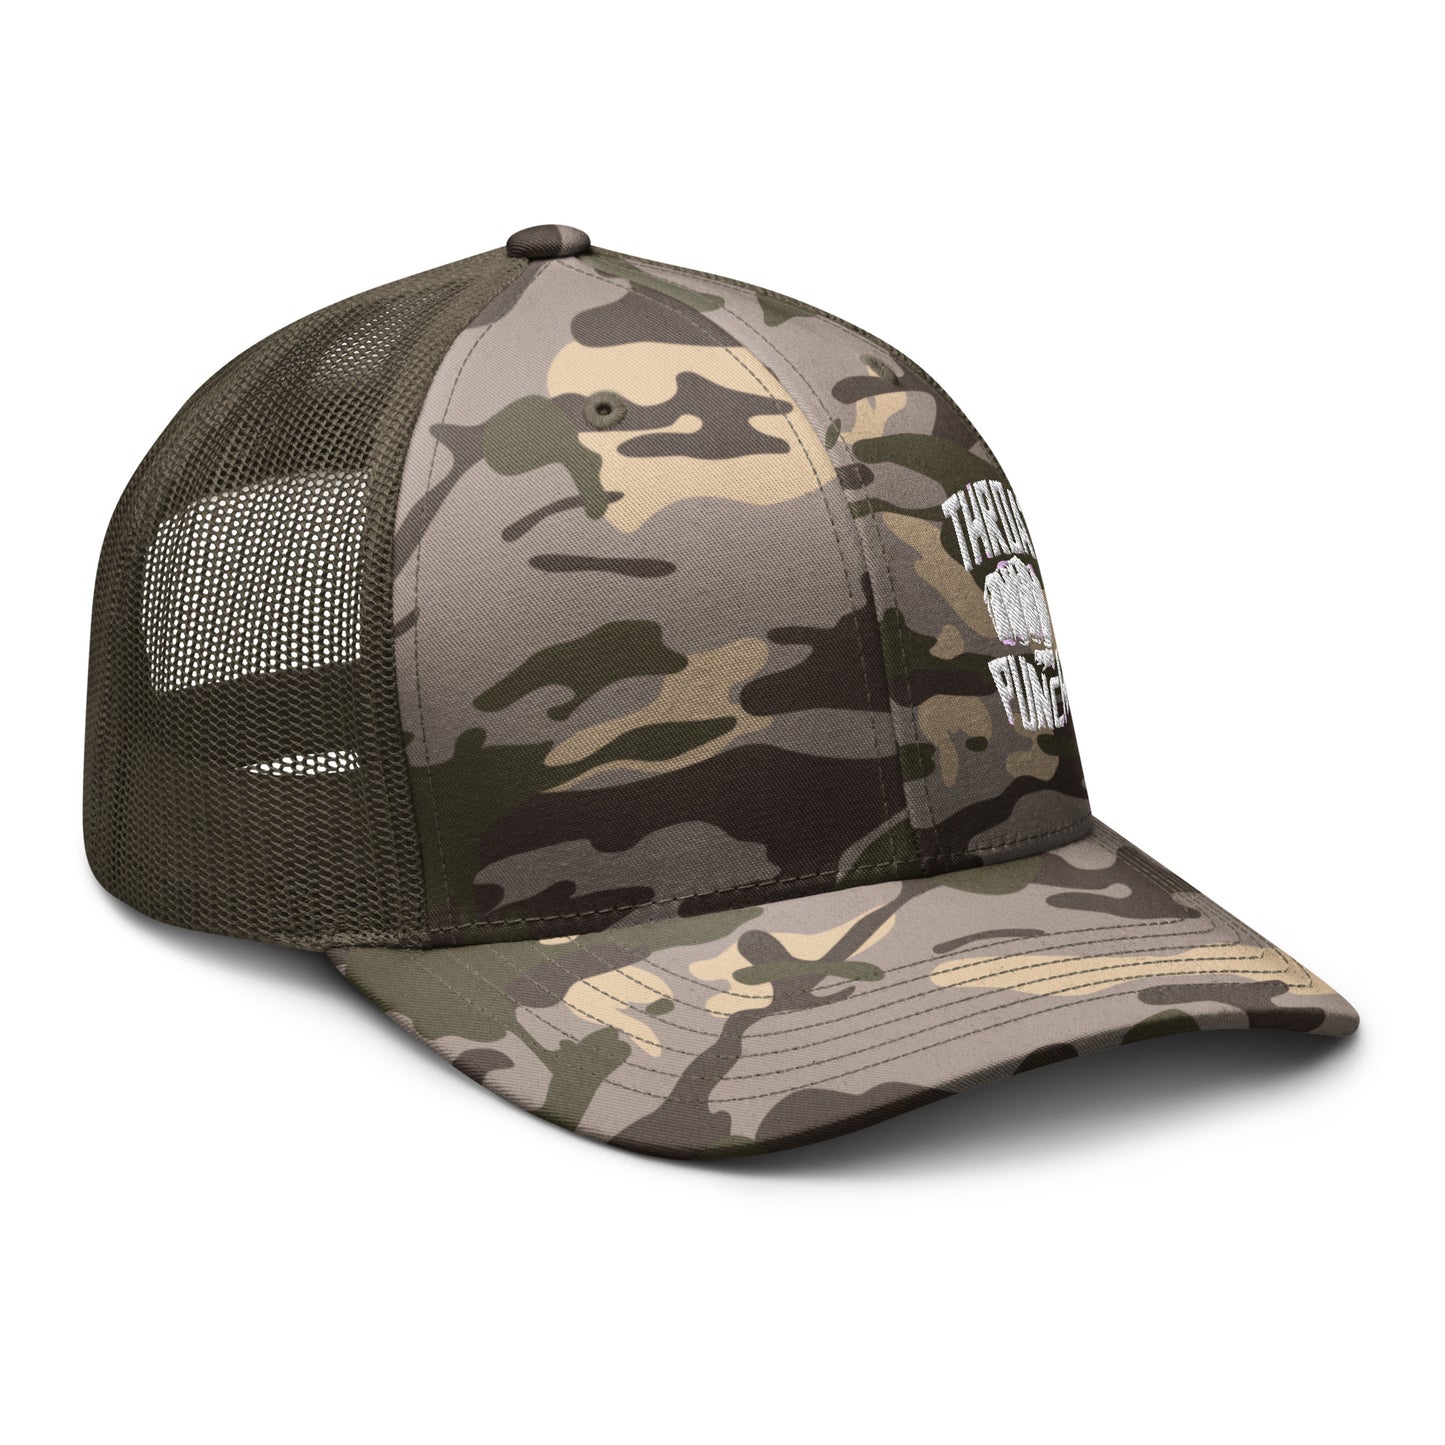 Throat Punch Camouflage trucker hat